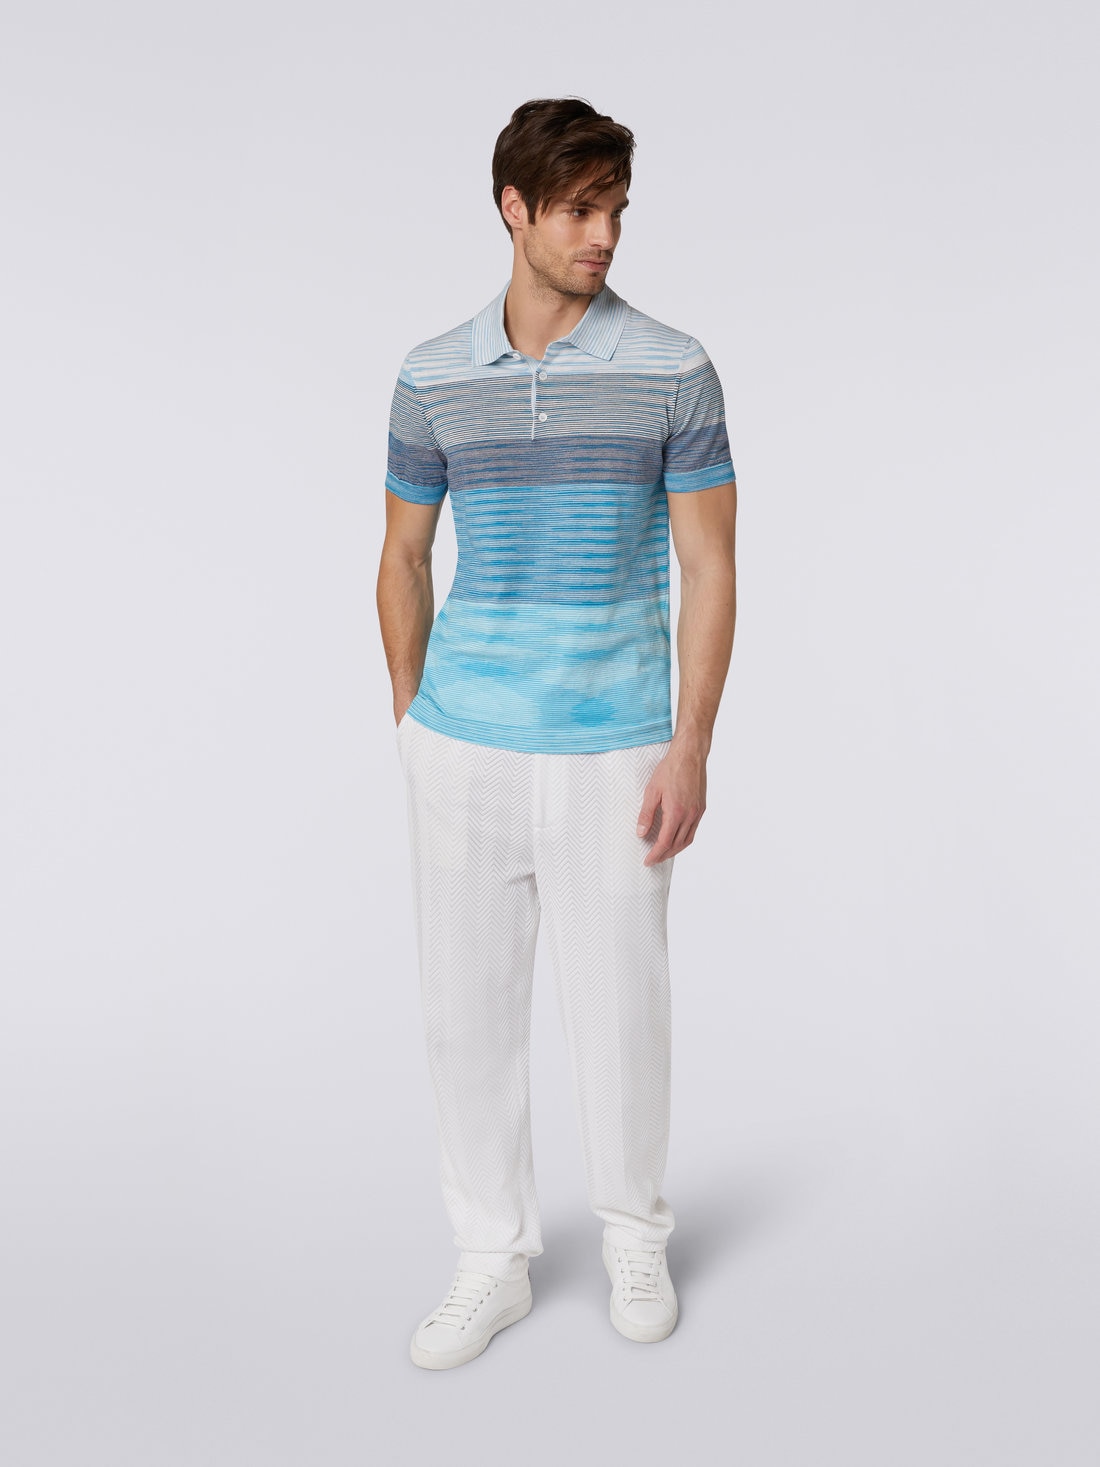 Kurzärmeliges Poloshirt aus gestreifter Baumwolle mit Dégradé-Effekt, Weiß & Hellblau - US23S20PBK012QS7294 - 1